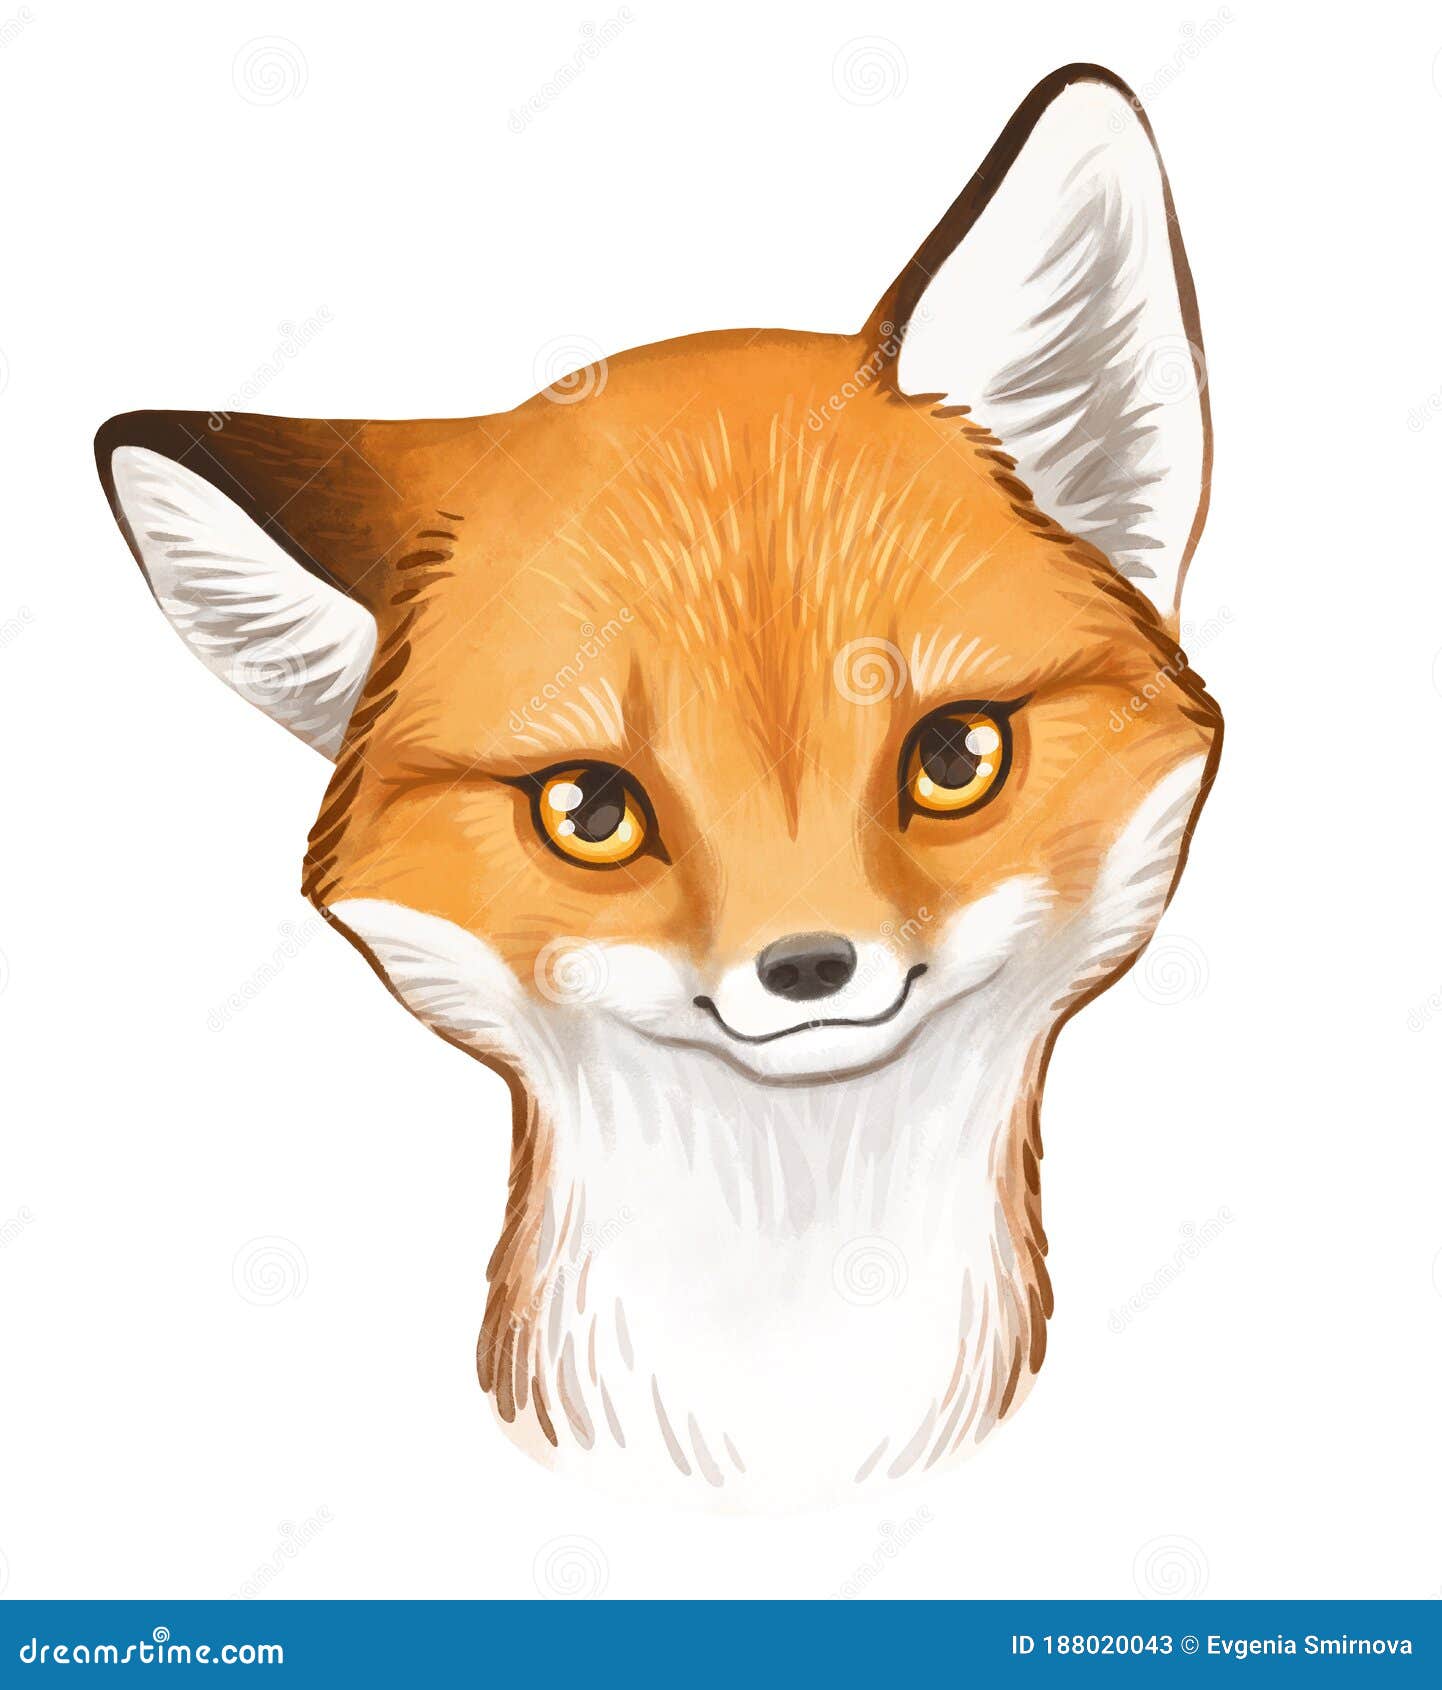 490 Baby Fox Illustrations RoyaltyFree Vector Graphics  Clip Art   iStock  Cute baby fox Baby fox cartoon Mom and baby fox